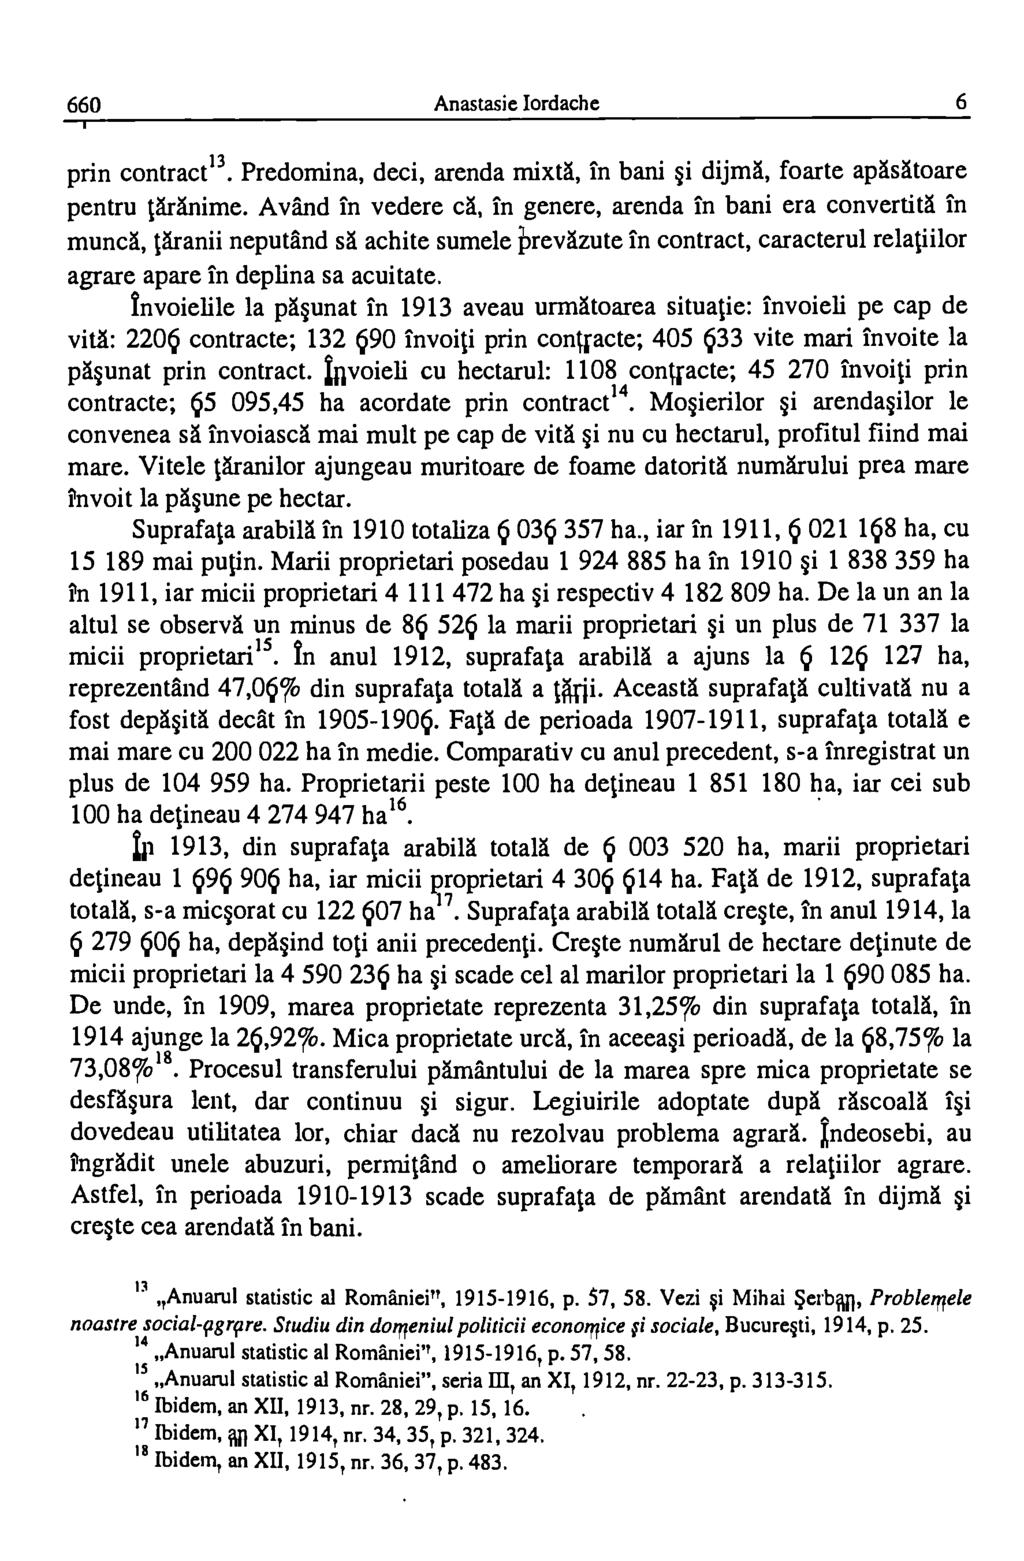 660 Anastasie Iordache 6 prin contract13. Predomina, deci, arenda mixta, in bath i dijma, foarte apasatoare pentru taranime.